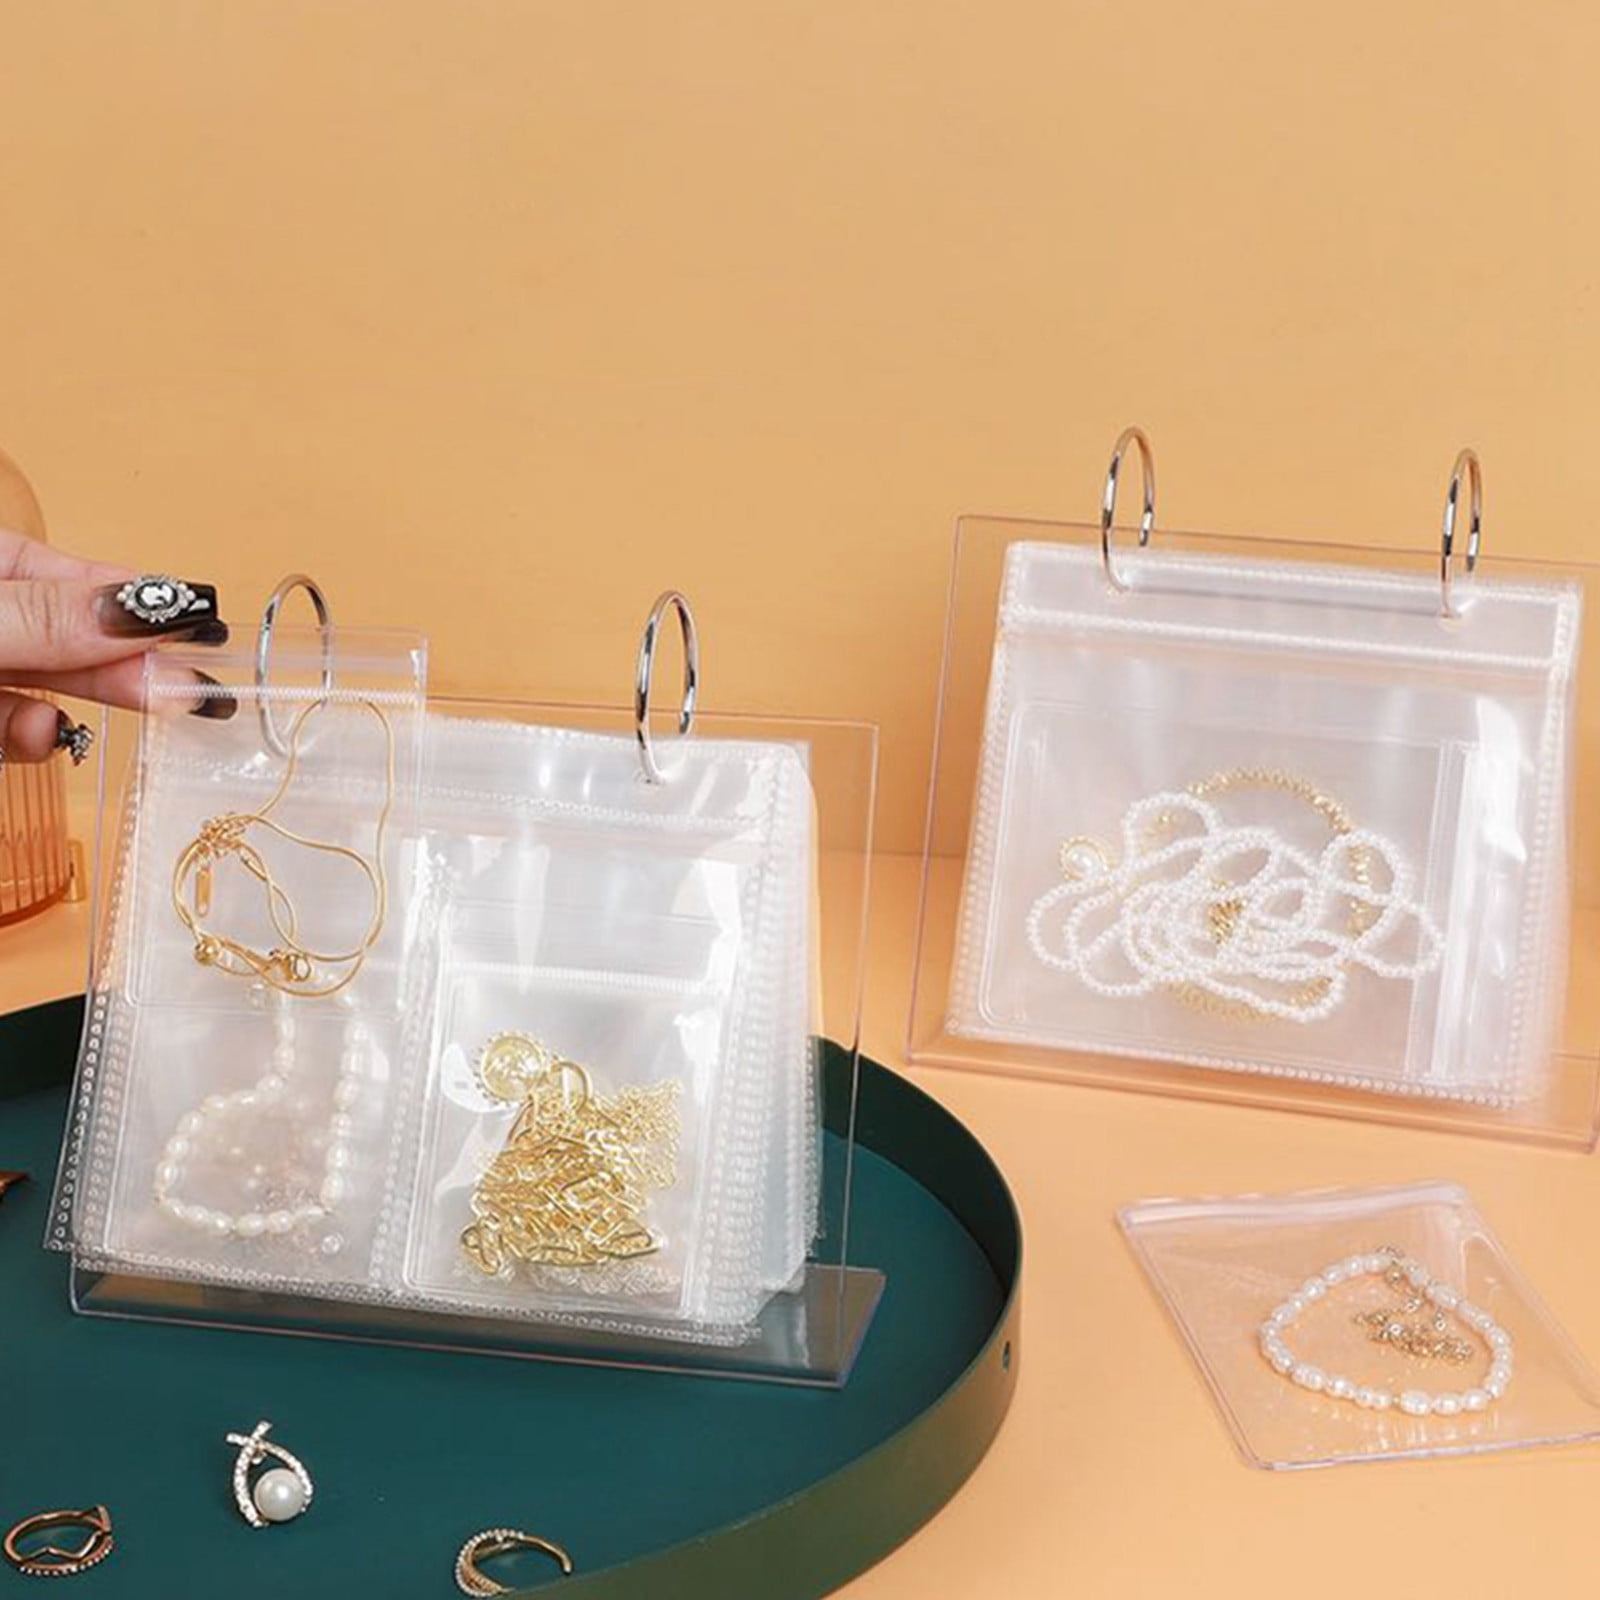 Pack of 4 - Colour Brick Block Rubber Bracelets - Party Bag Fillers  889070155649 | eBay